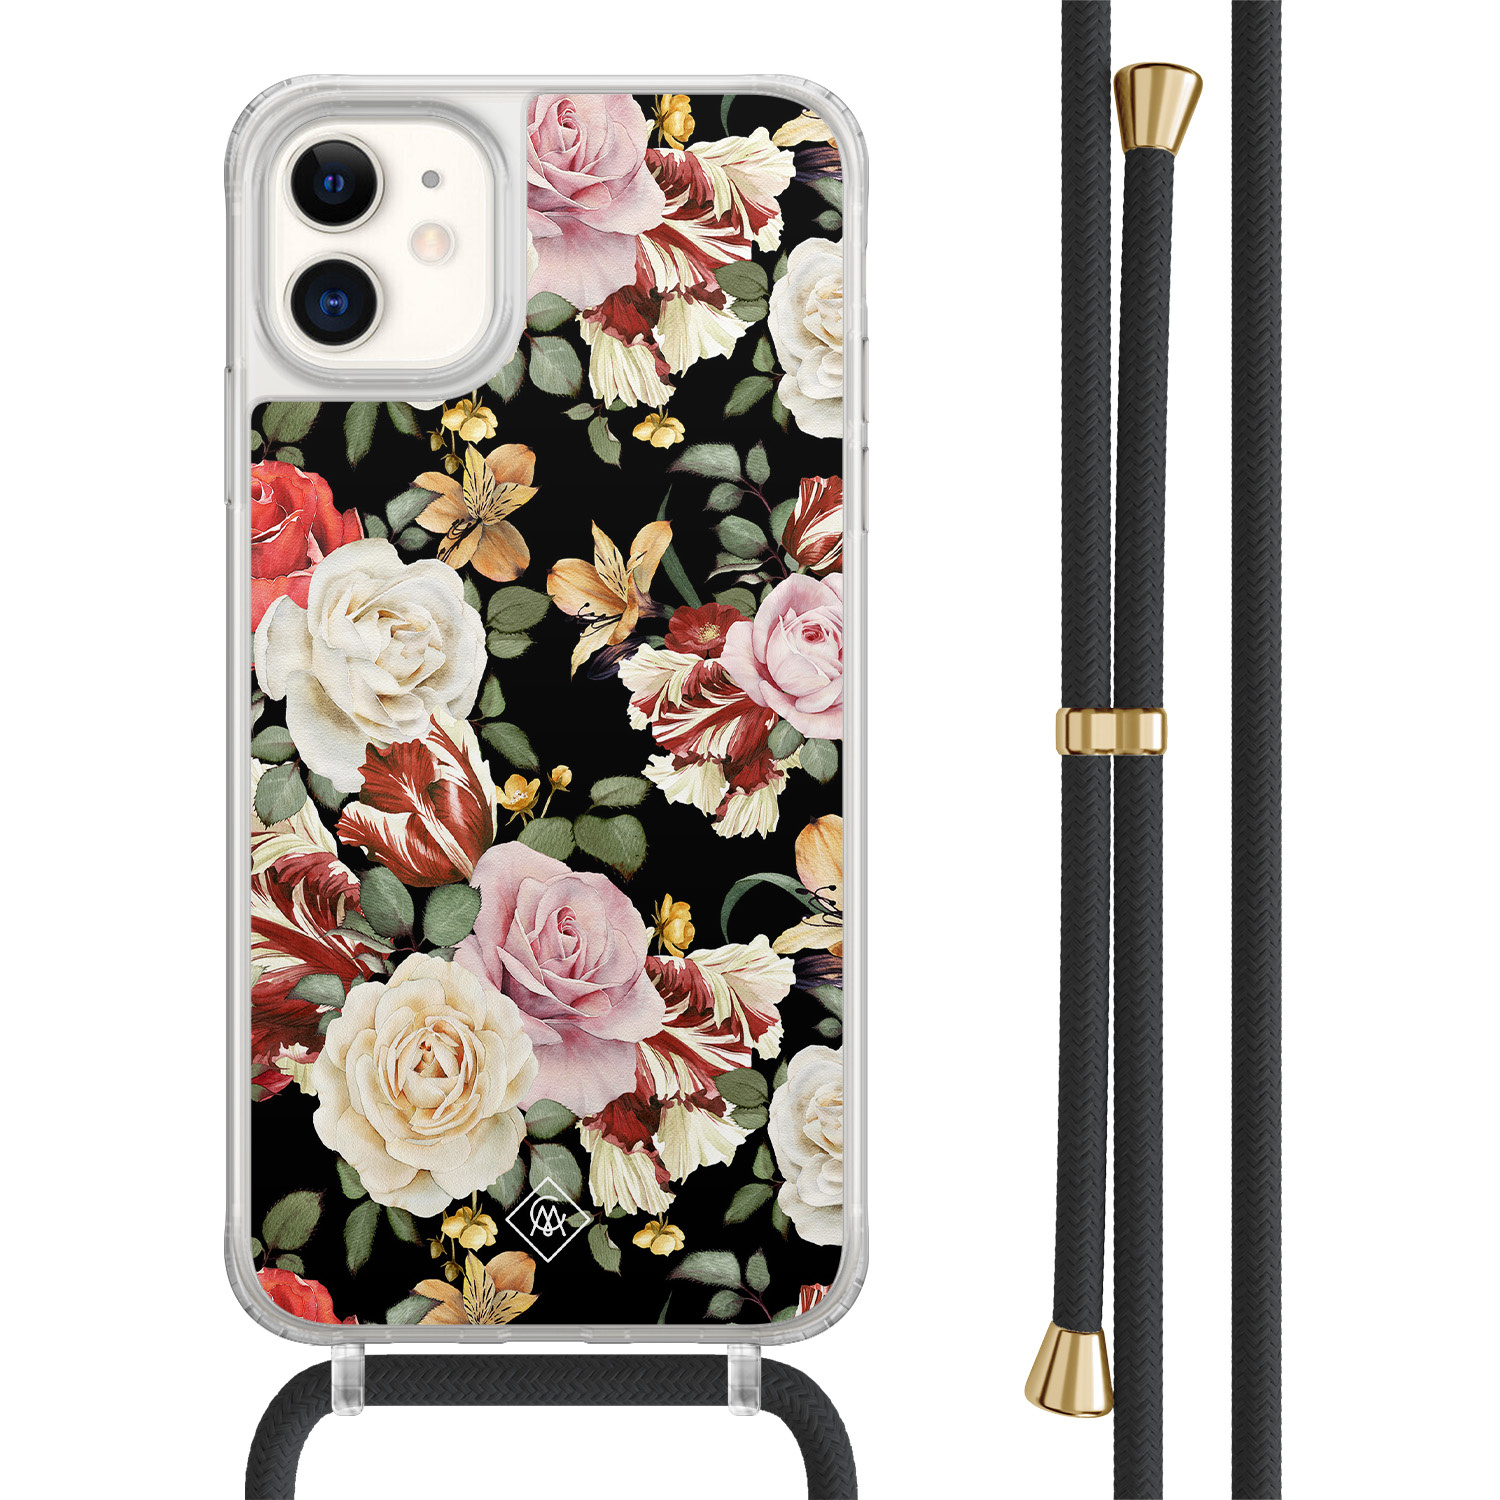 Casimoda® - iPhone 11 hoesje met zwart koord - Bloemen flowerpower - Afneembaar koord - TPU/acryl